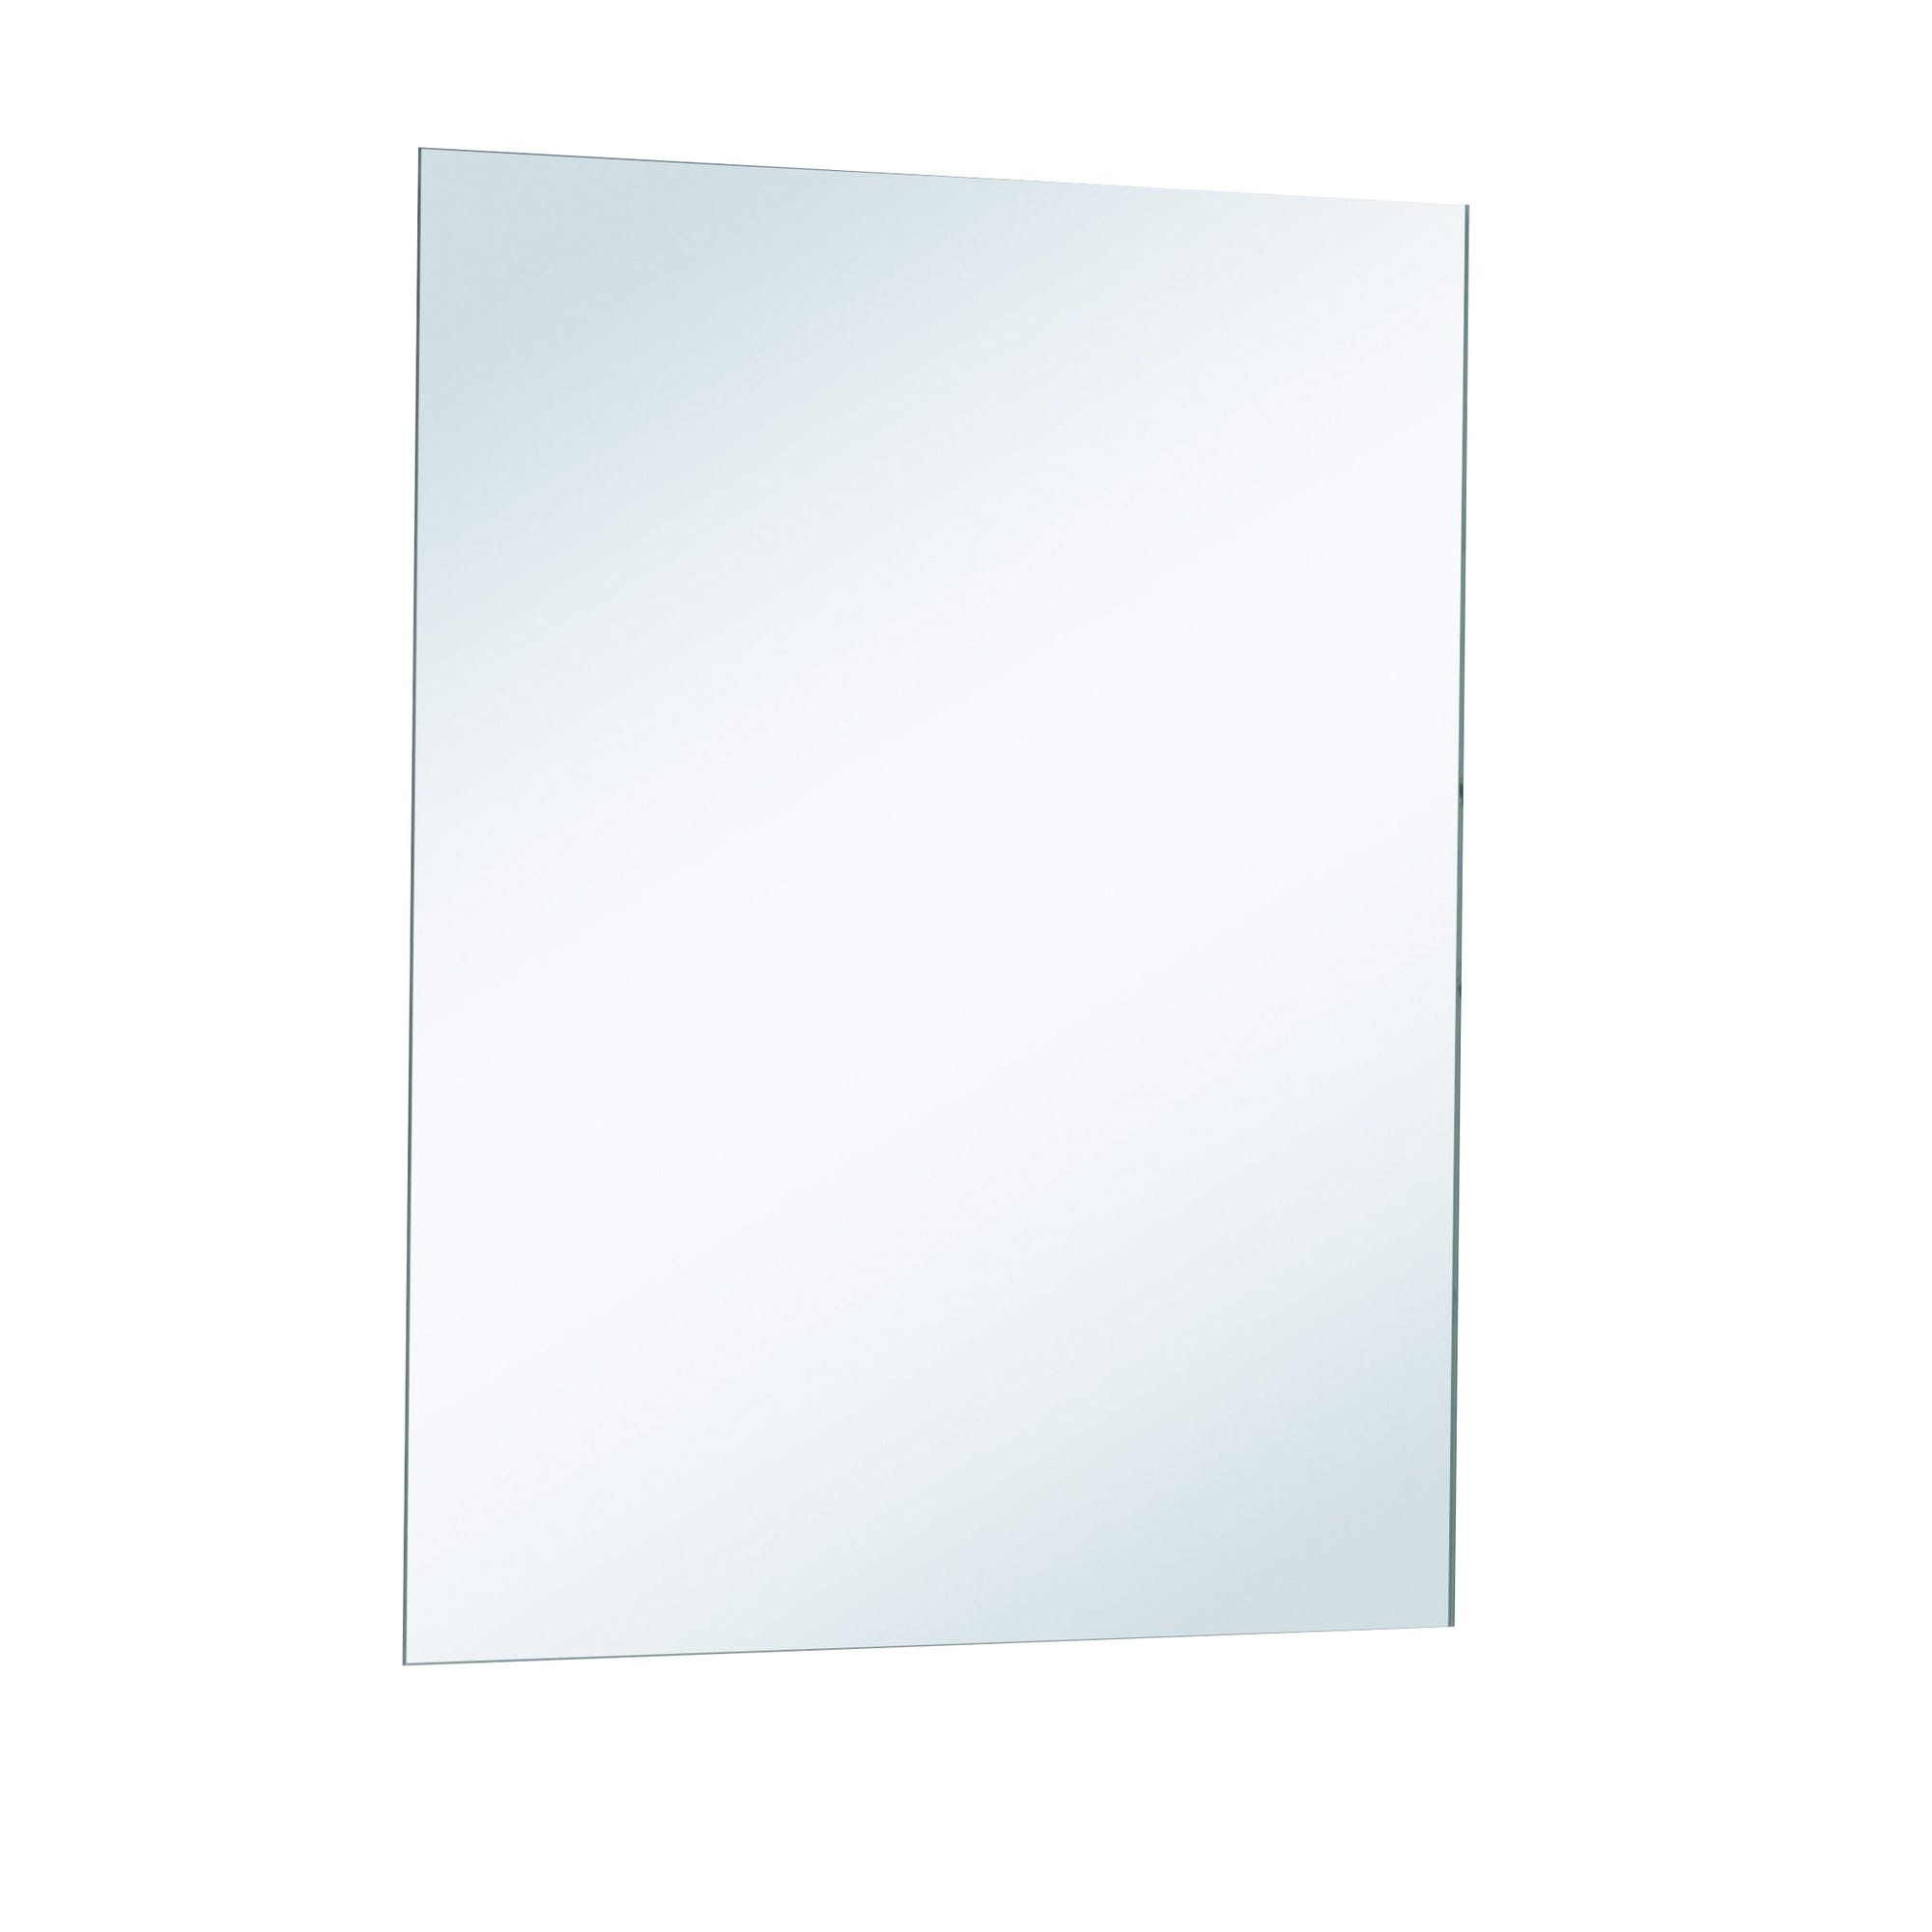 Miroir bords polis  60X45 cm 0